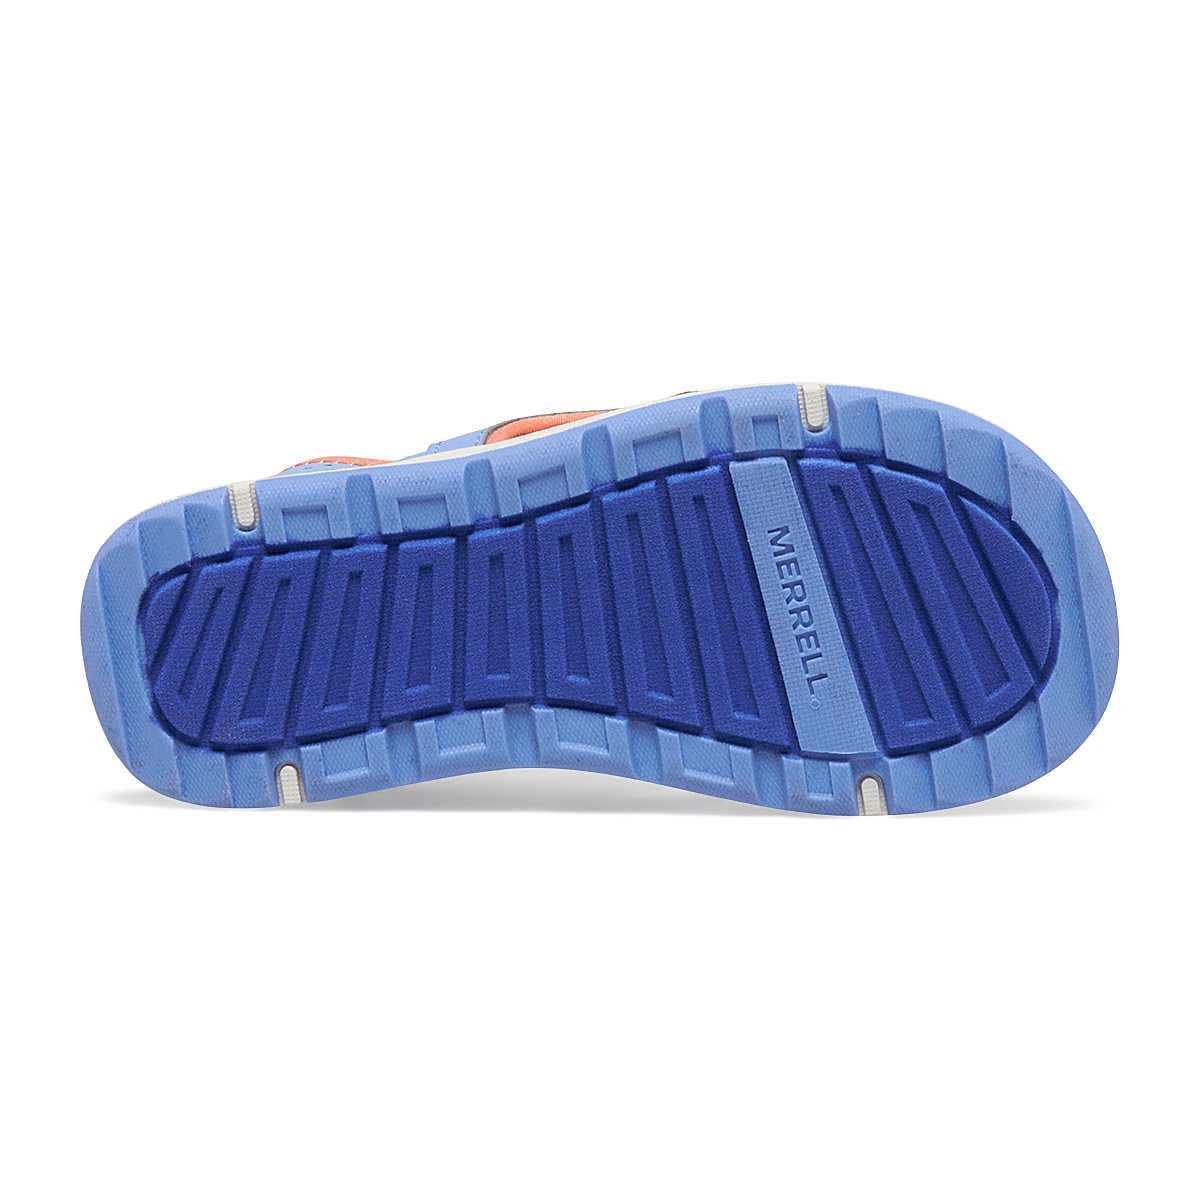 Panther Sandal 3.0 Blue/Coral (10c-5Y)